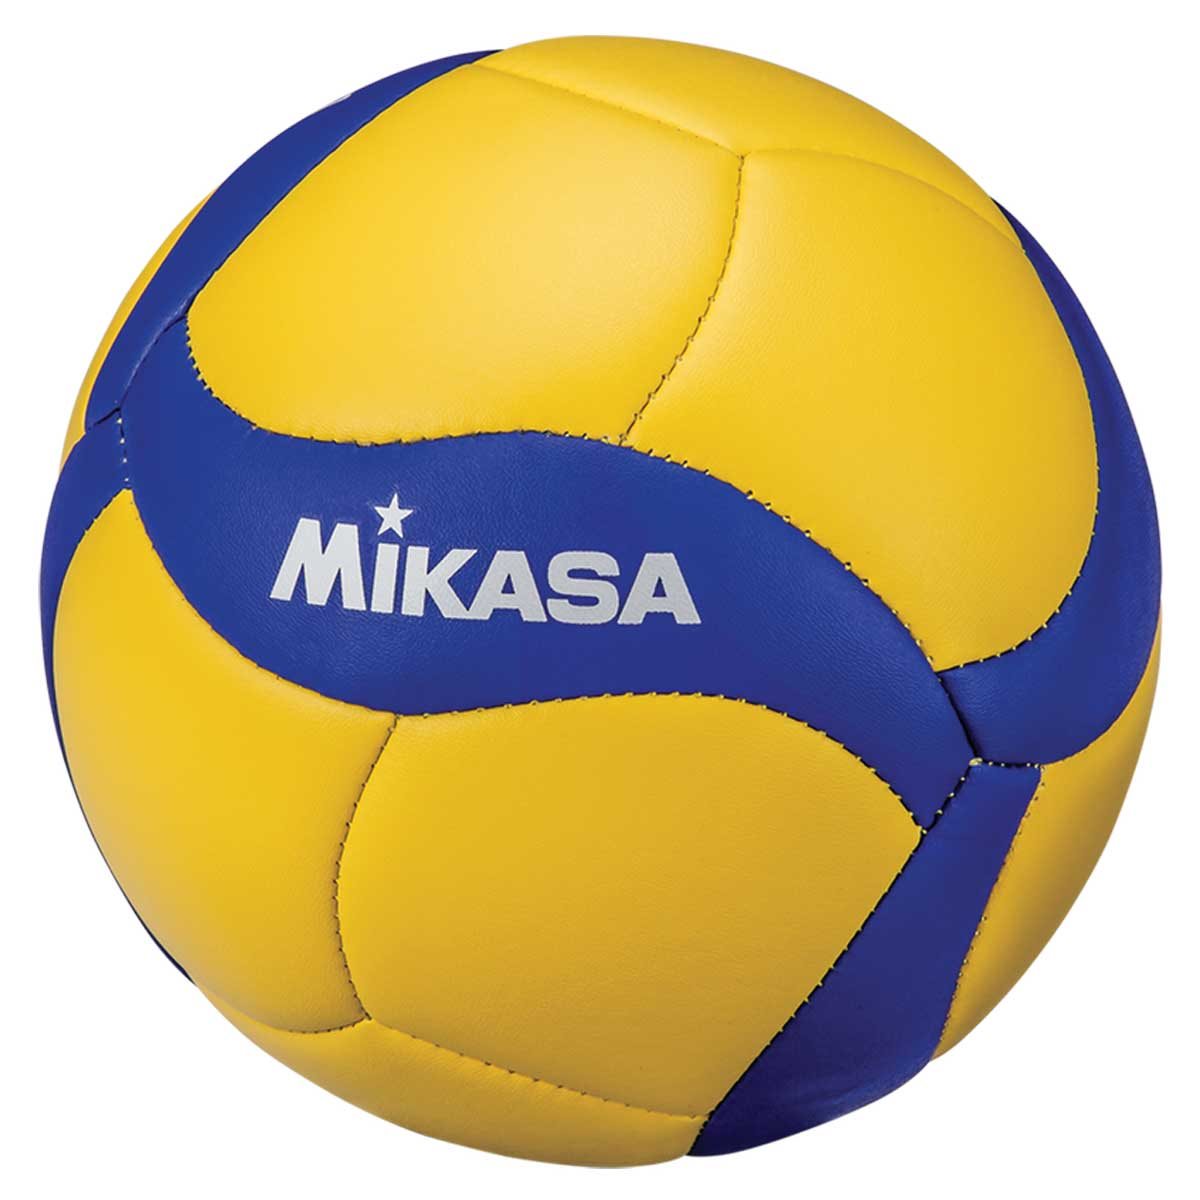 Mikasa Mini Replica of the 2020 Olympic Game Ball